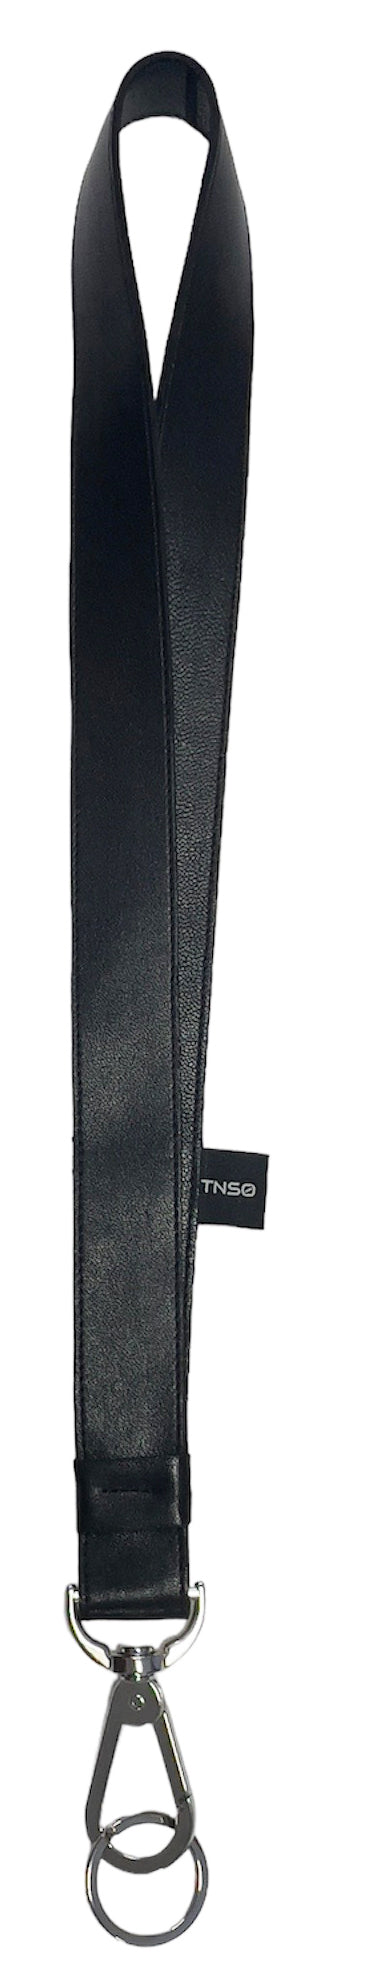 TNSO portachiavi Leather Lanyard Limited Edition black